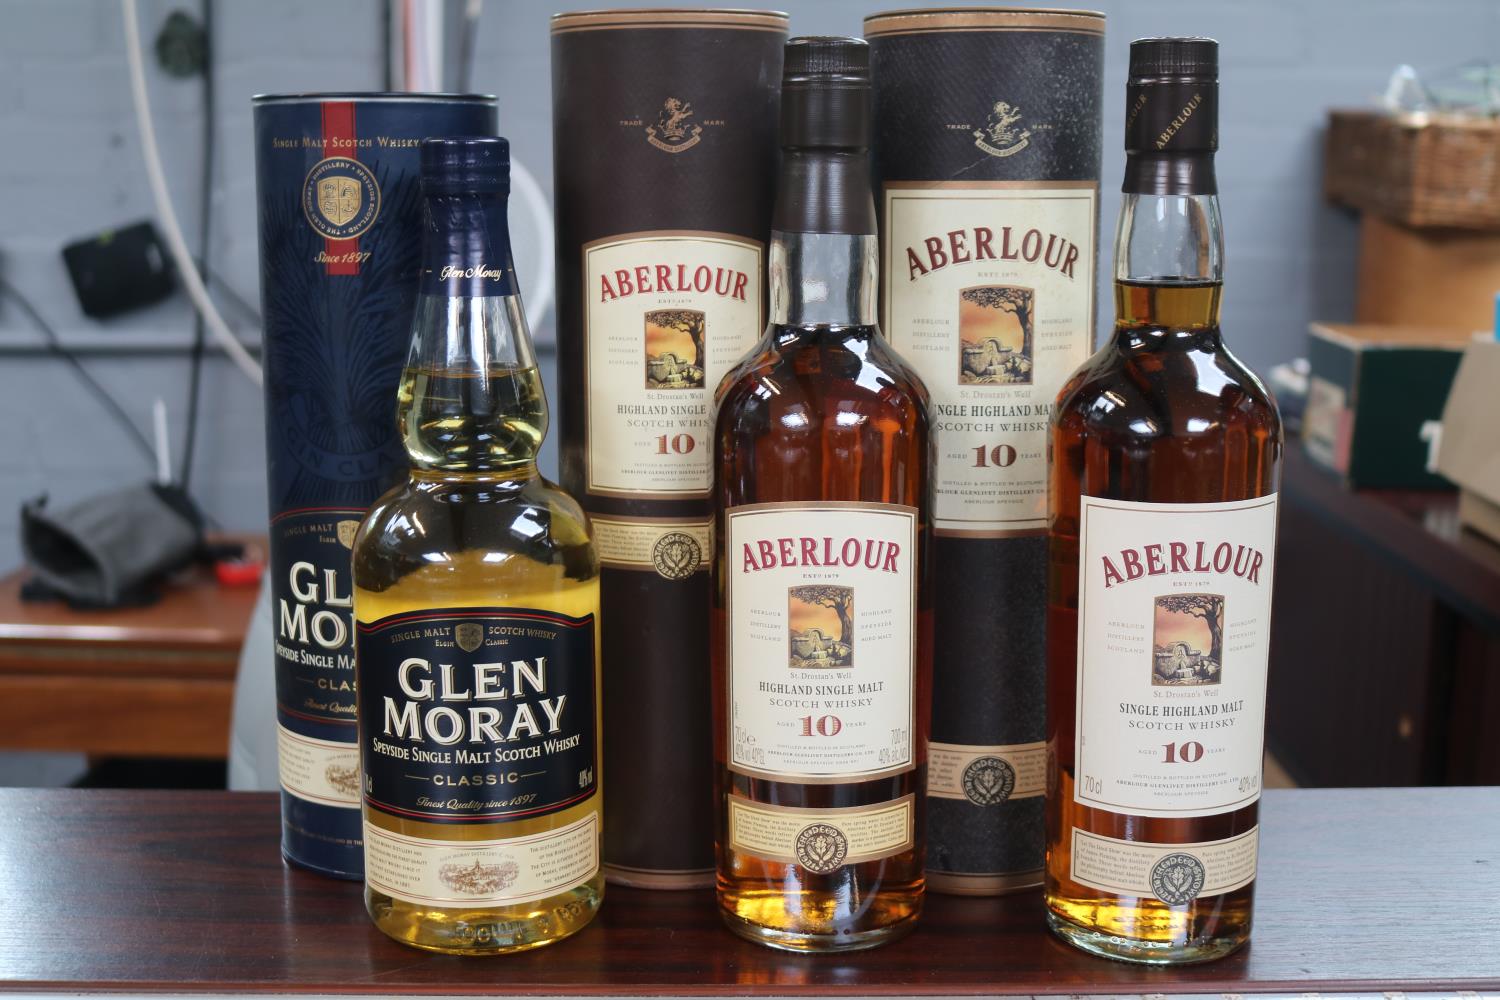 2 Cased Aberlour Highland Single Malt Scotch Whisky and a Cased Glen Moray Speyside Single Malt